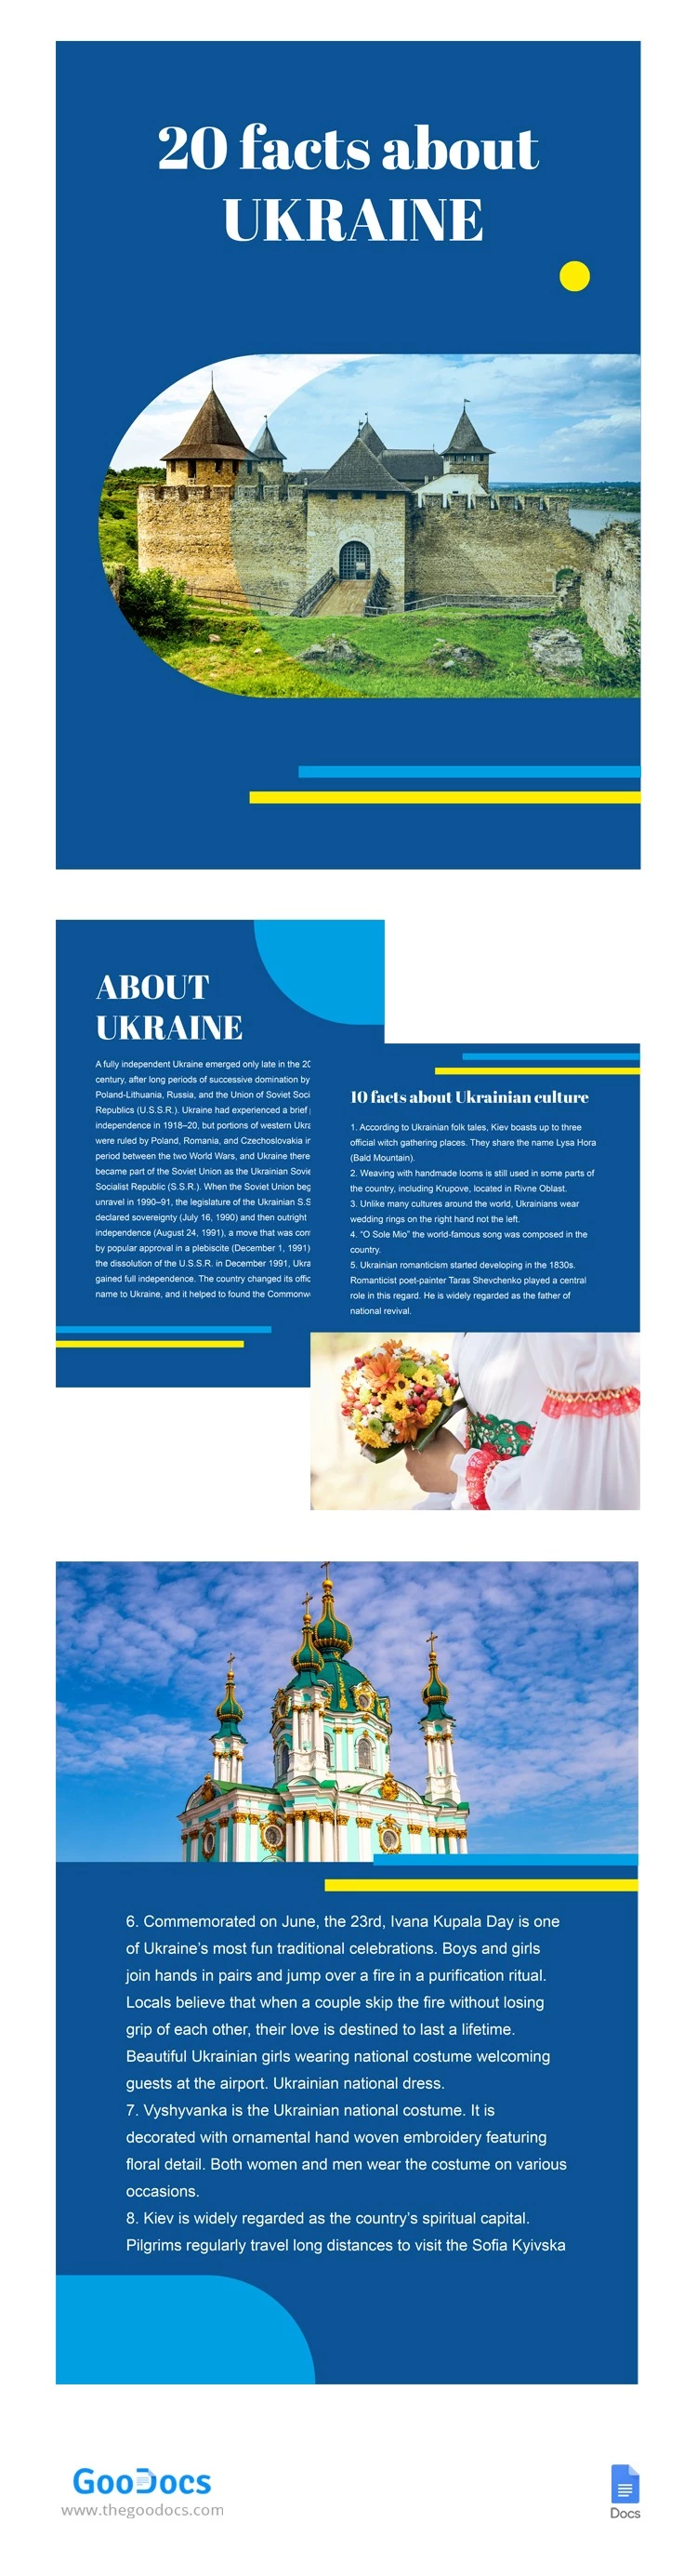 About UKRAINE Brochure - free Google Docs Template - 10063759